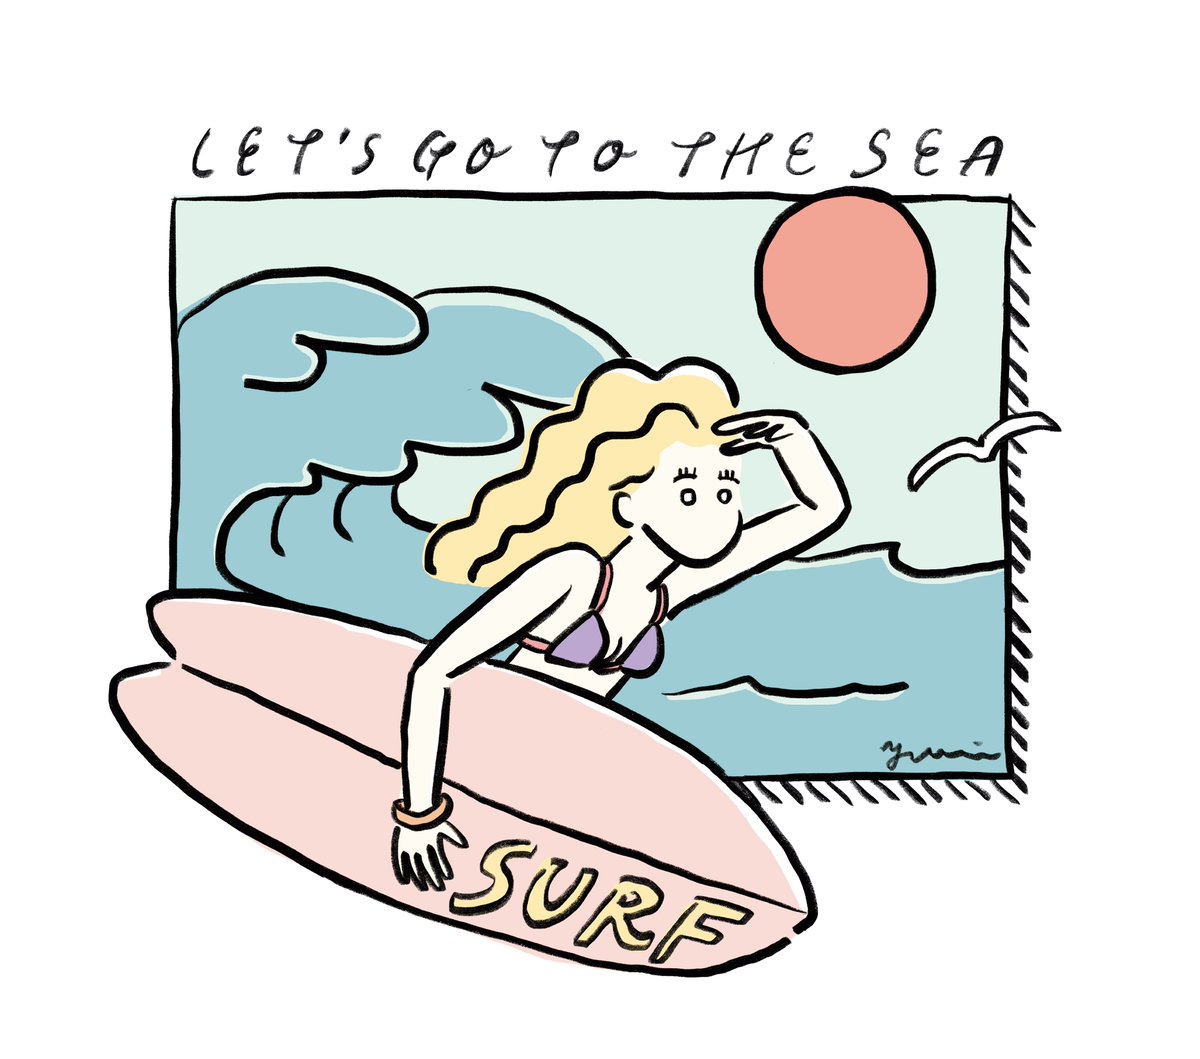 ট ইট র まつもとゆり 海へ行こう サングラスありなし２パターン Illustration Surfing イラスト サーフィン ガールズイラスト